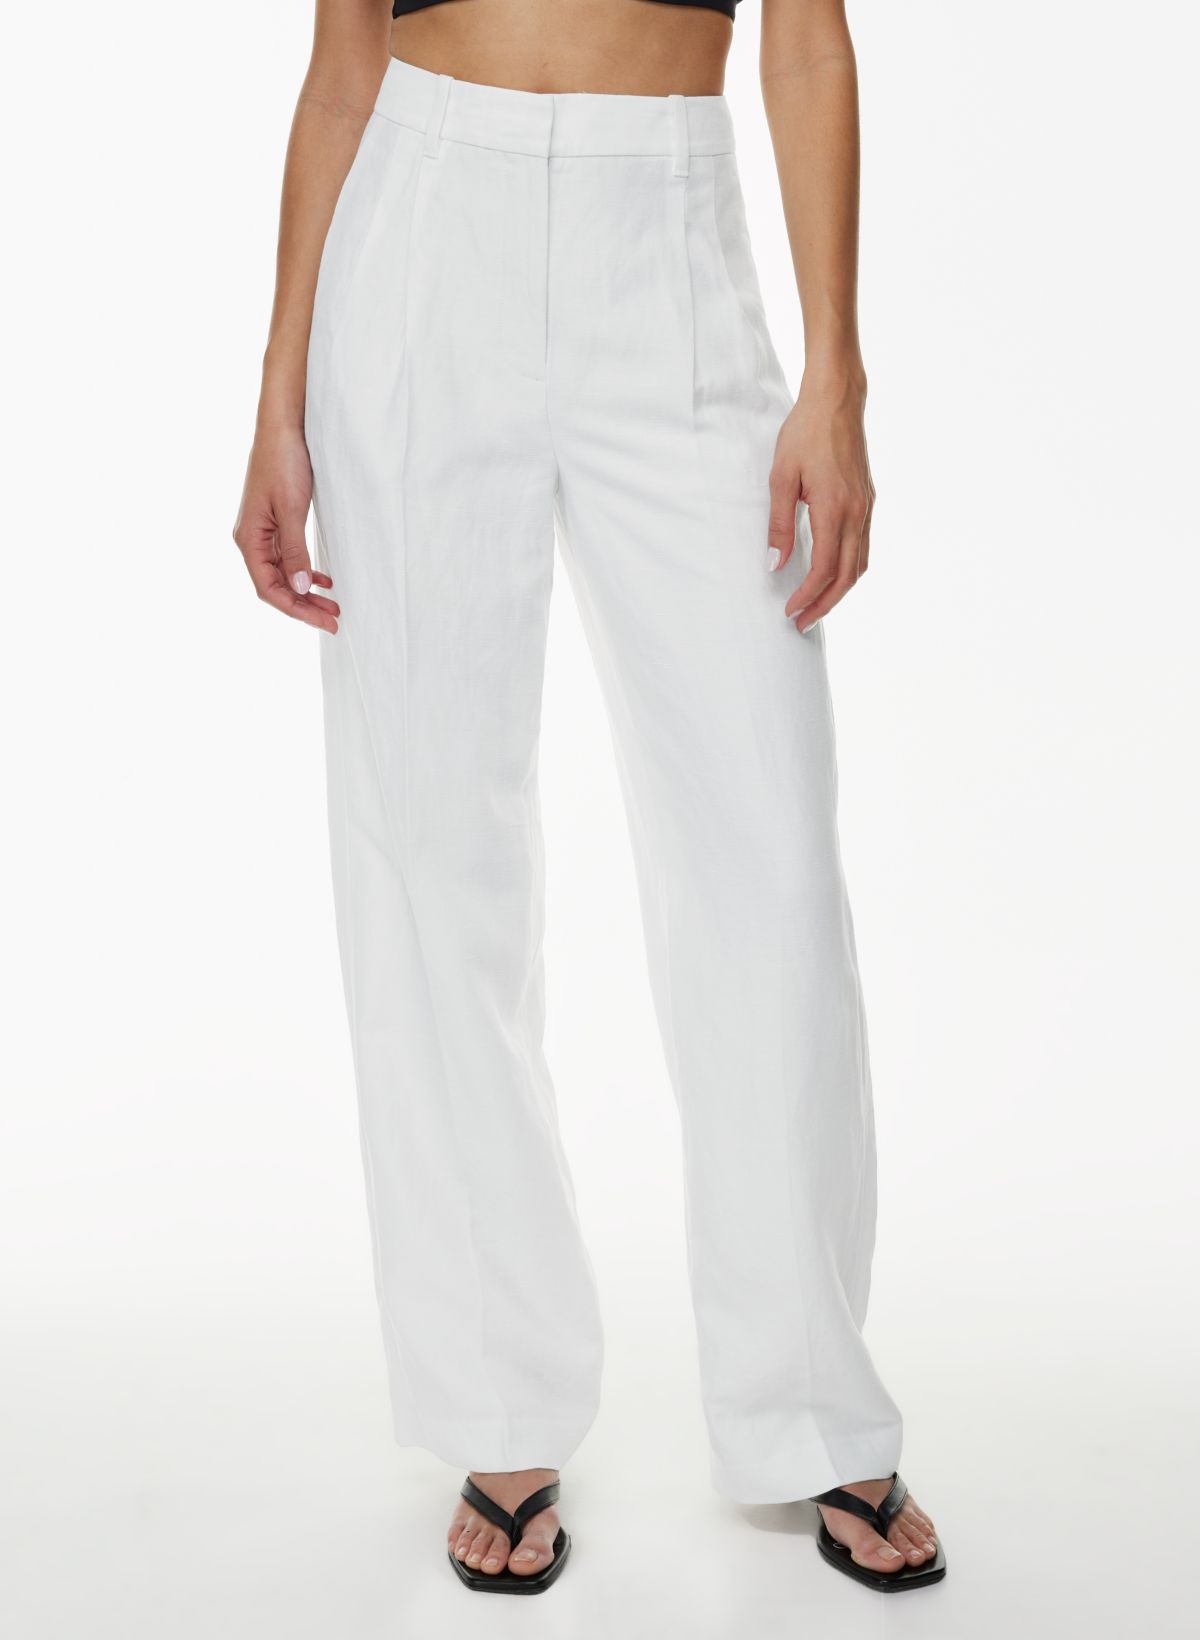 Linen Long Pants, Elastic Waist Pants Premium Linen Clothing for Women 